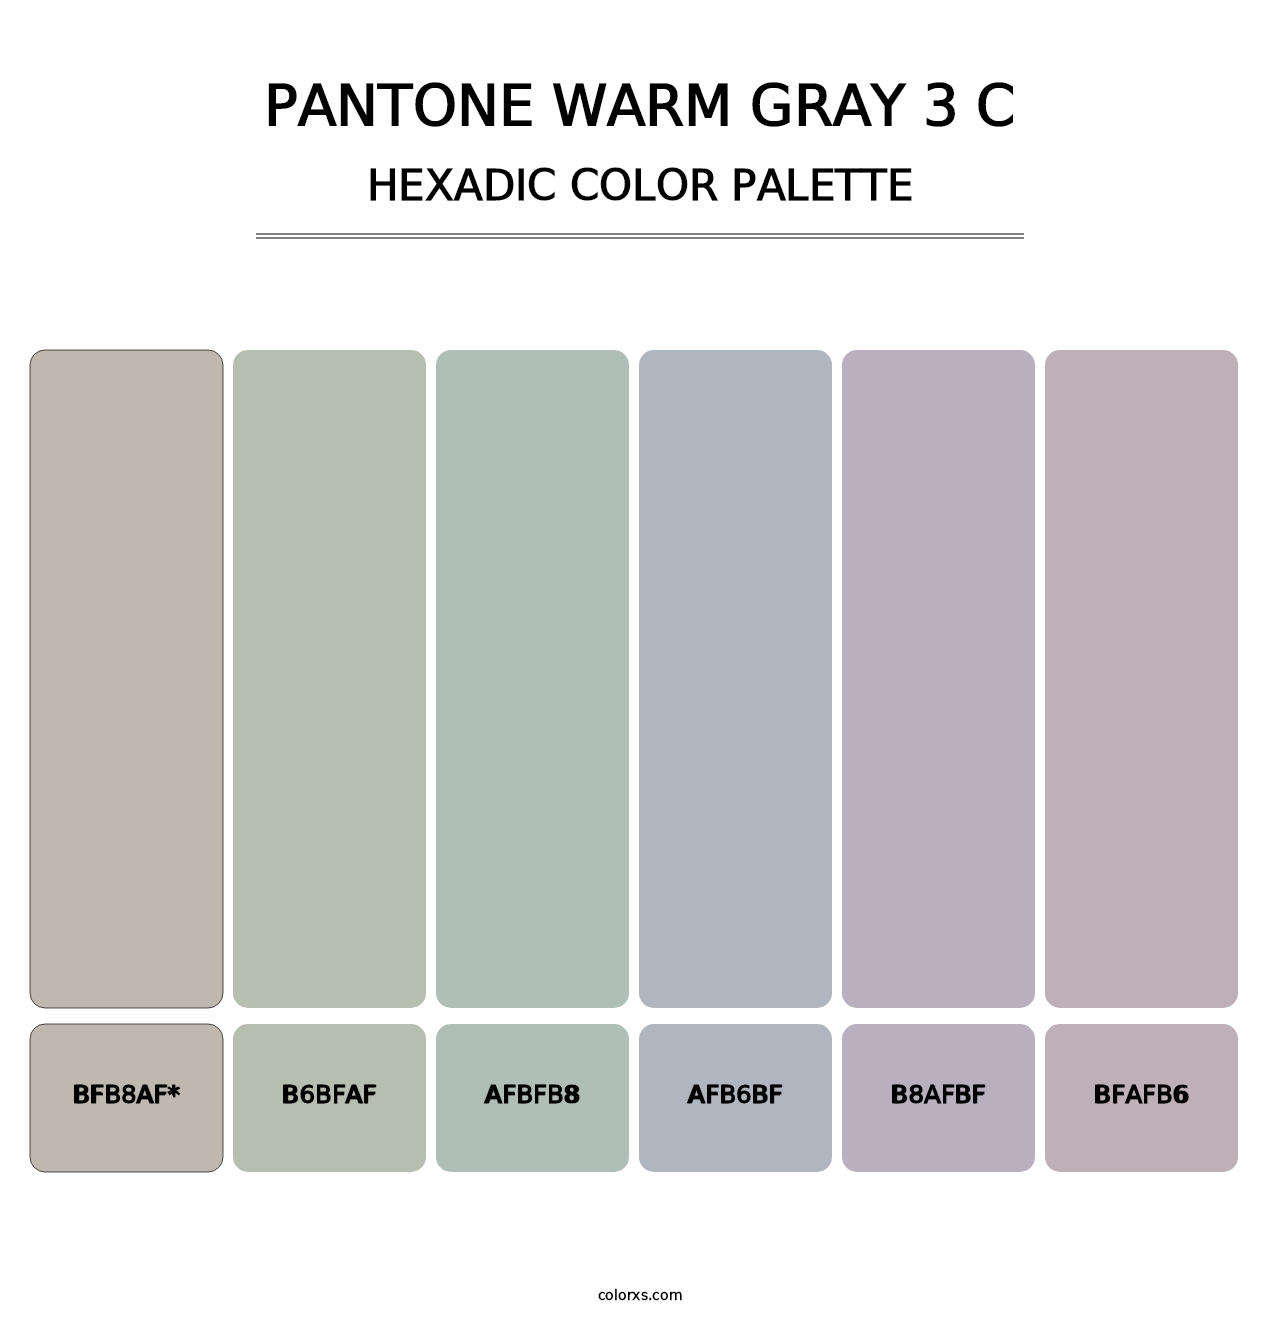 PANTONE Warm Gray 3 C - Hexadic Color Palette